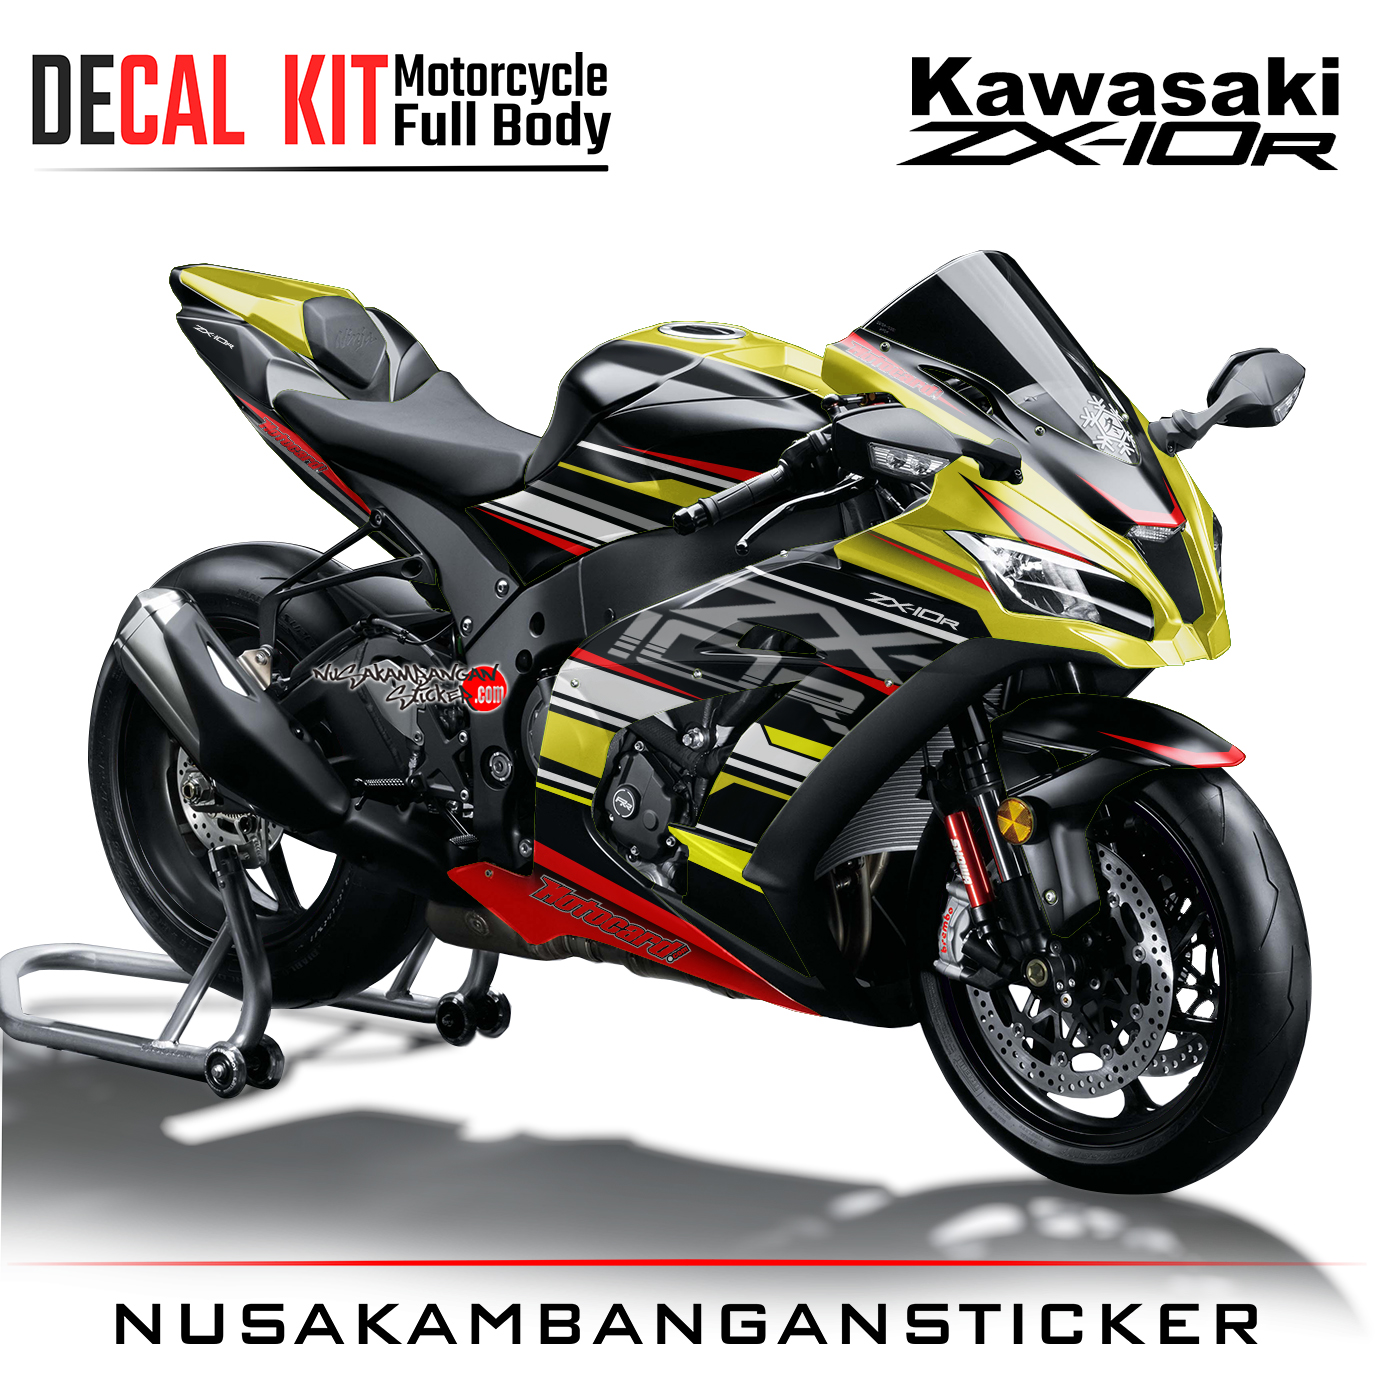 Decal Kit Sticker Kawasaki Ninja ZX 10R Big Bike Decal Motosport Graphic 05  – Nusakambangan Sticker